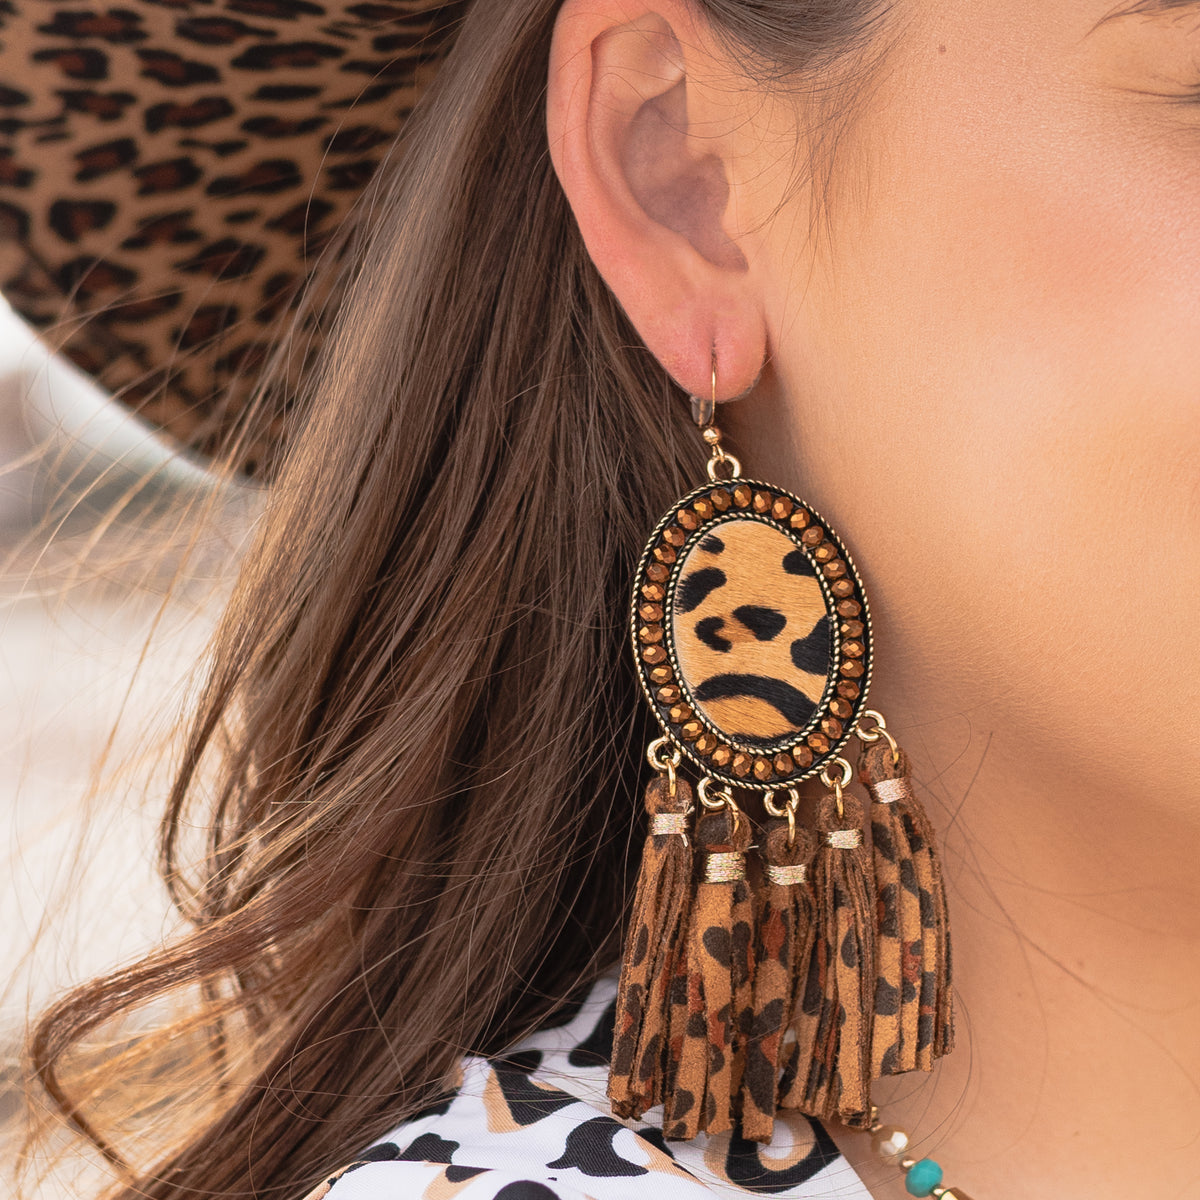 734001 - Animal Hide Tassel Earrings - Cheetah Print - Fashion Jewelry Wholesale